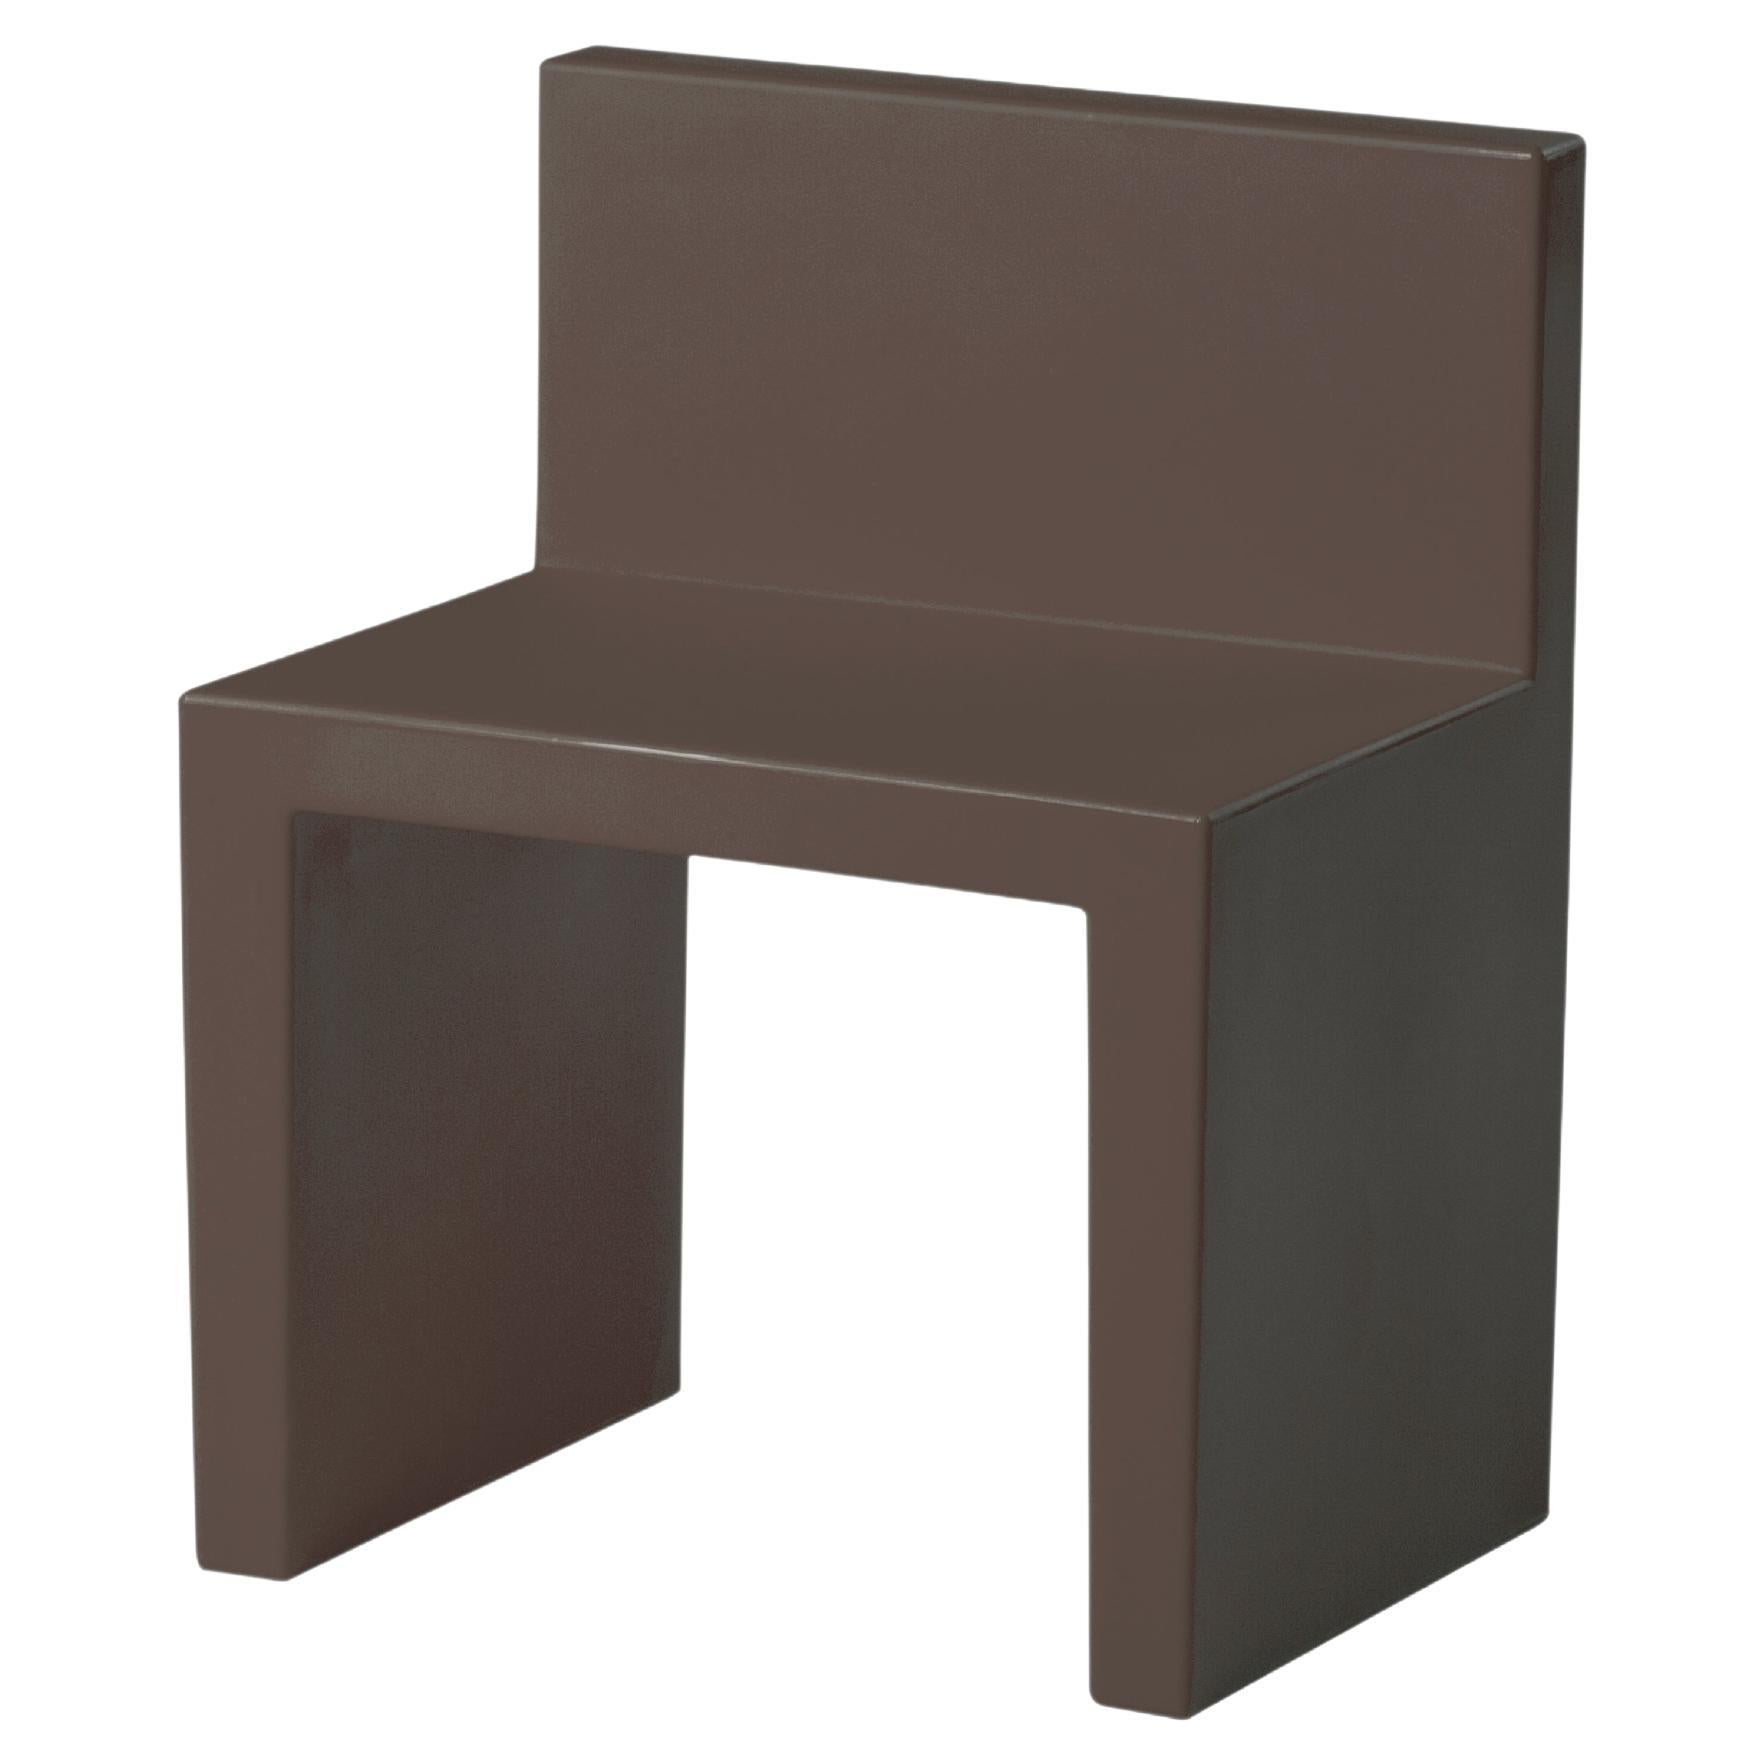 Slide Design Angolo Retto Kids Chair in Chocolate Brown by Slide Studio